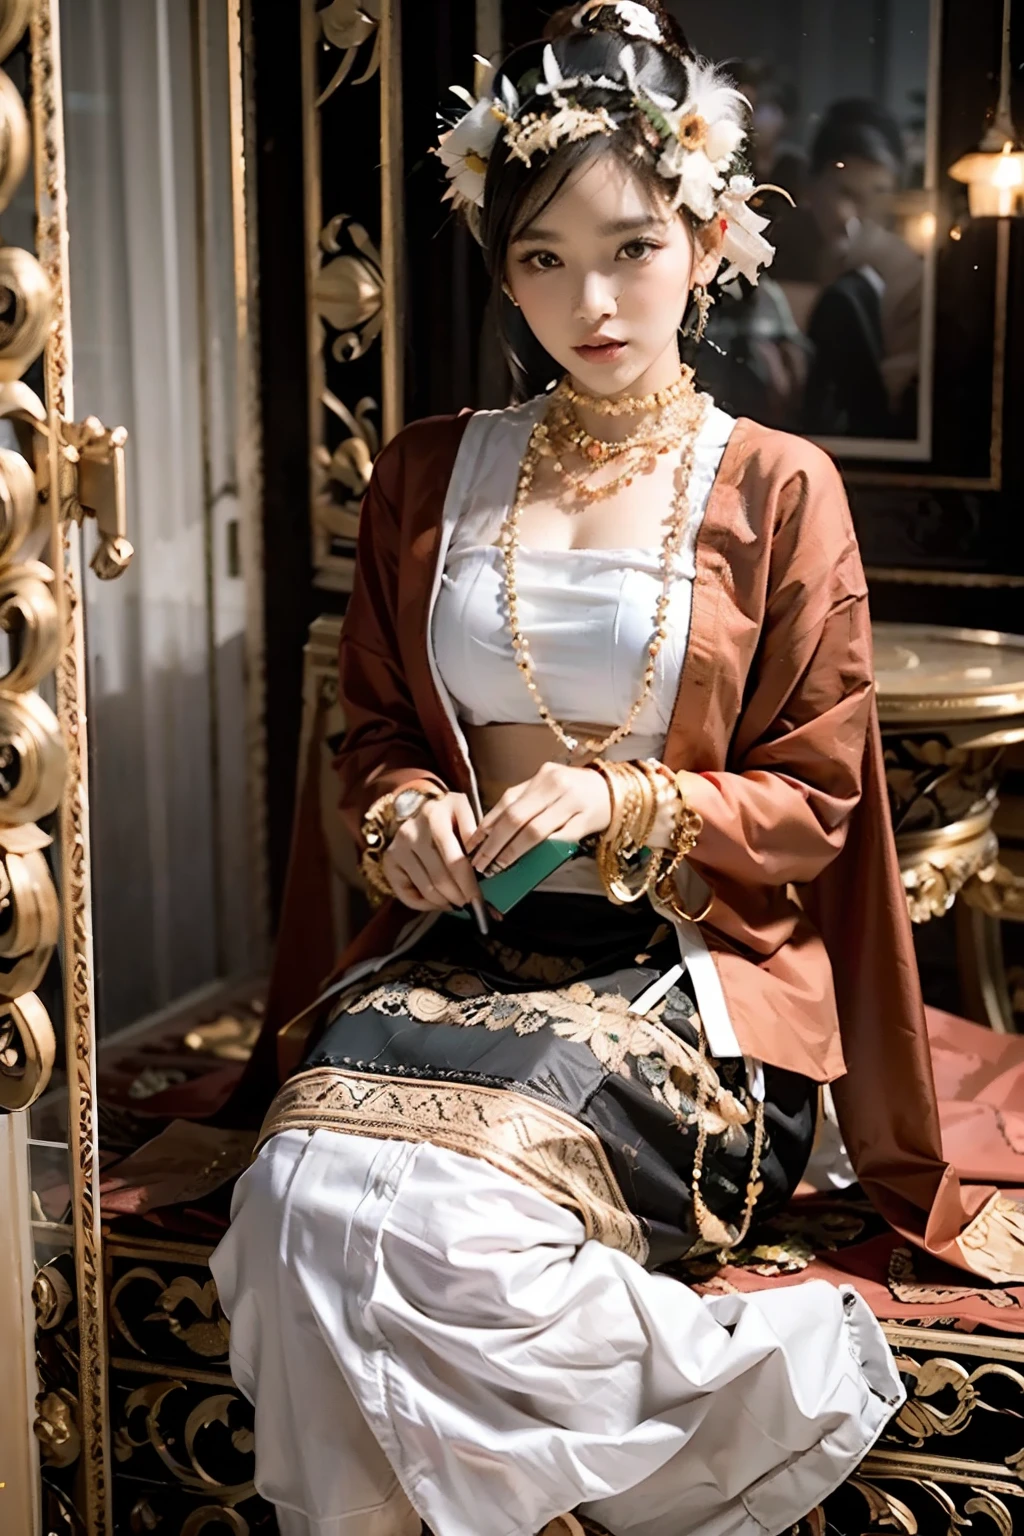 MMTD 缅甸图案传统服饰 穿美丽的女士, 佩戴珍珠项链和金手镯,全身细节之美